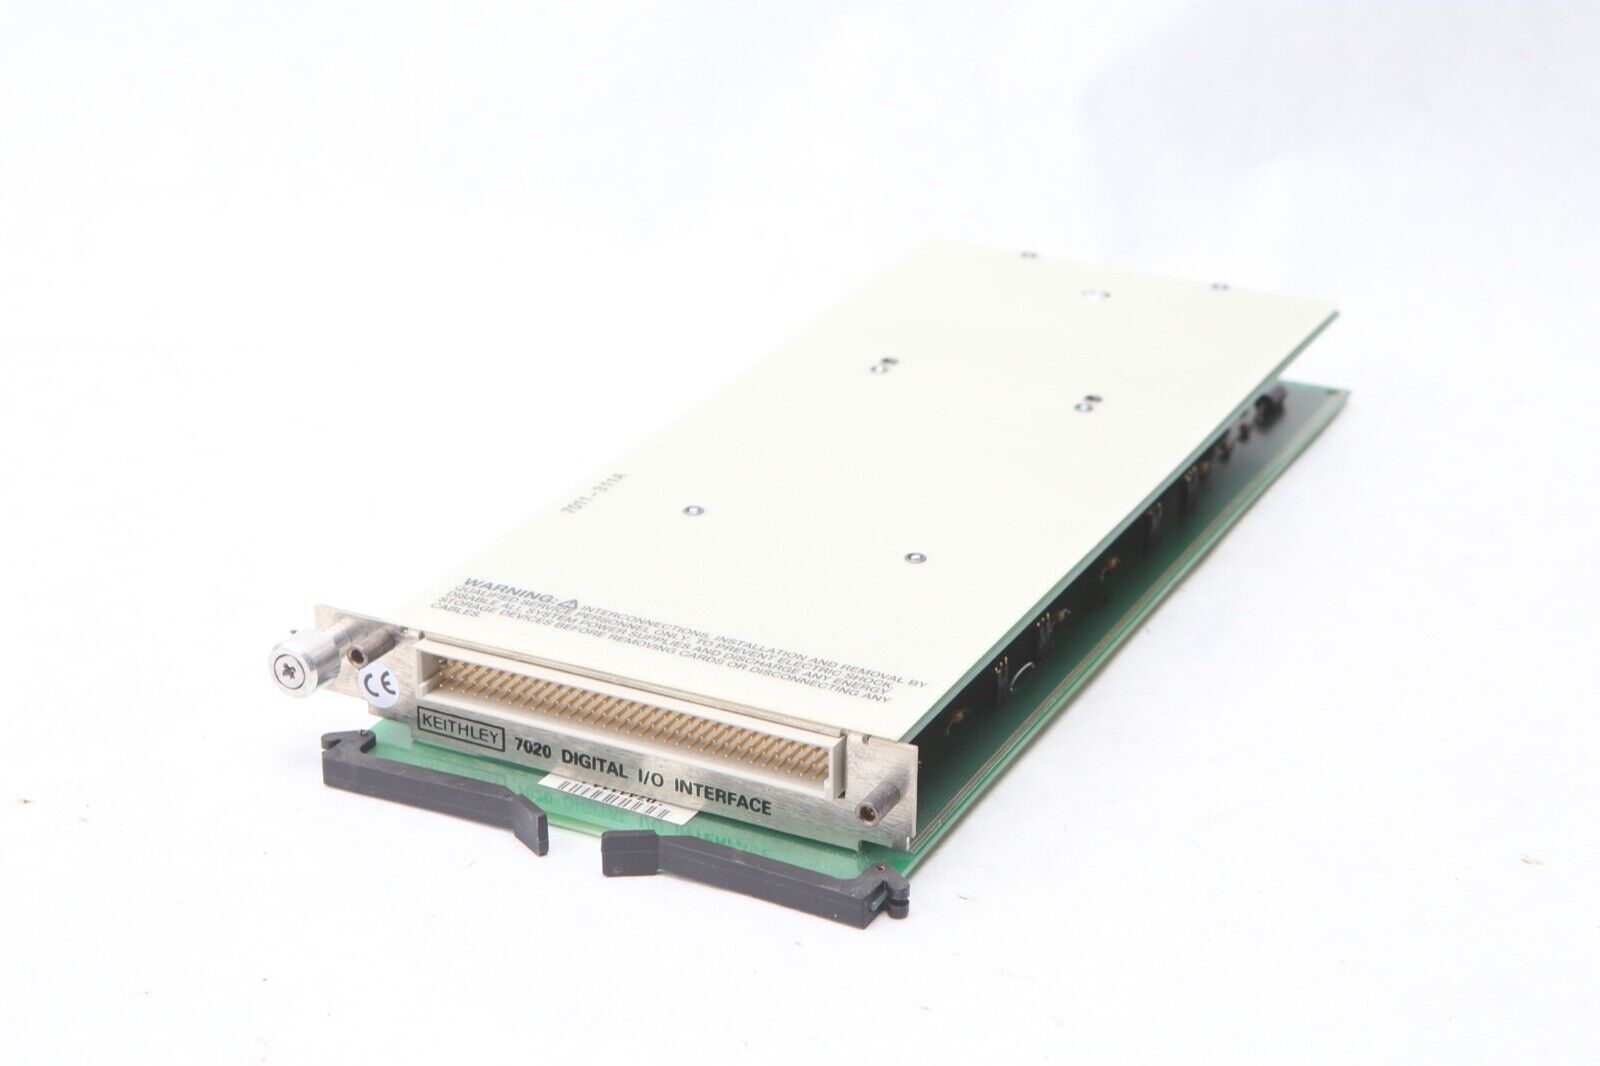 Keithley 7020 Digital I/O Card, 40 inputs, 40 outputs Mainframe S43